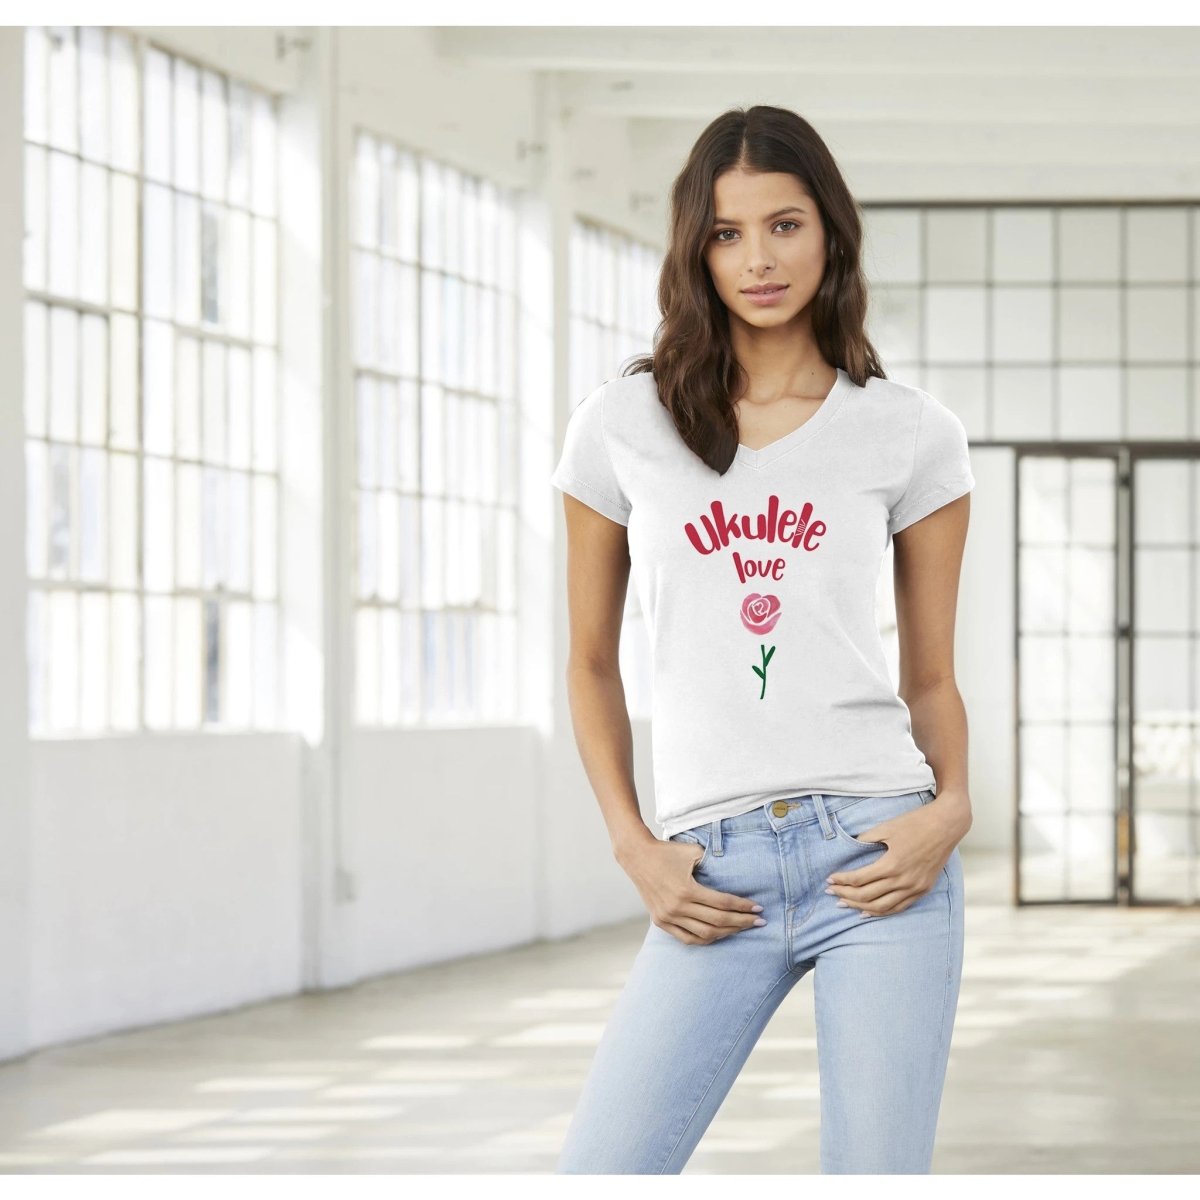 Premium 'Uke Rose' Womens V-Neck T-shirt - Uke Tastic - S - Free Delivery - Uke Tastic